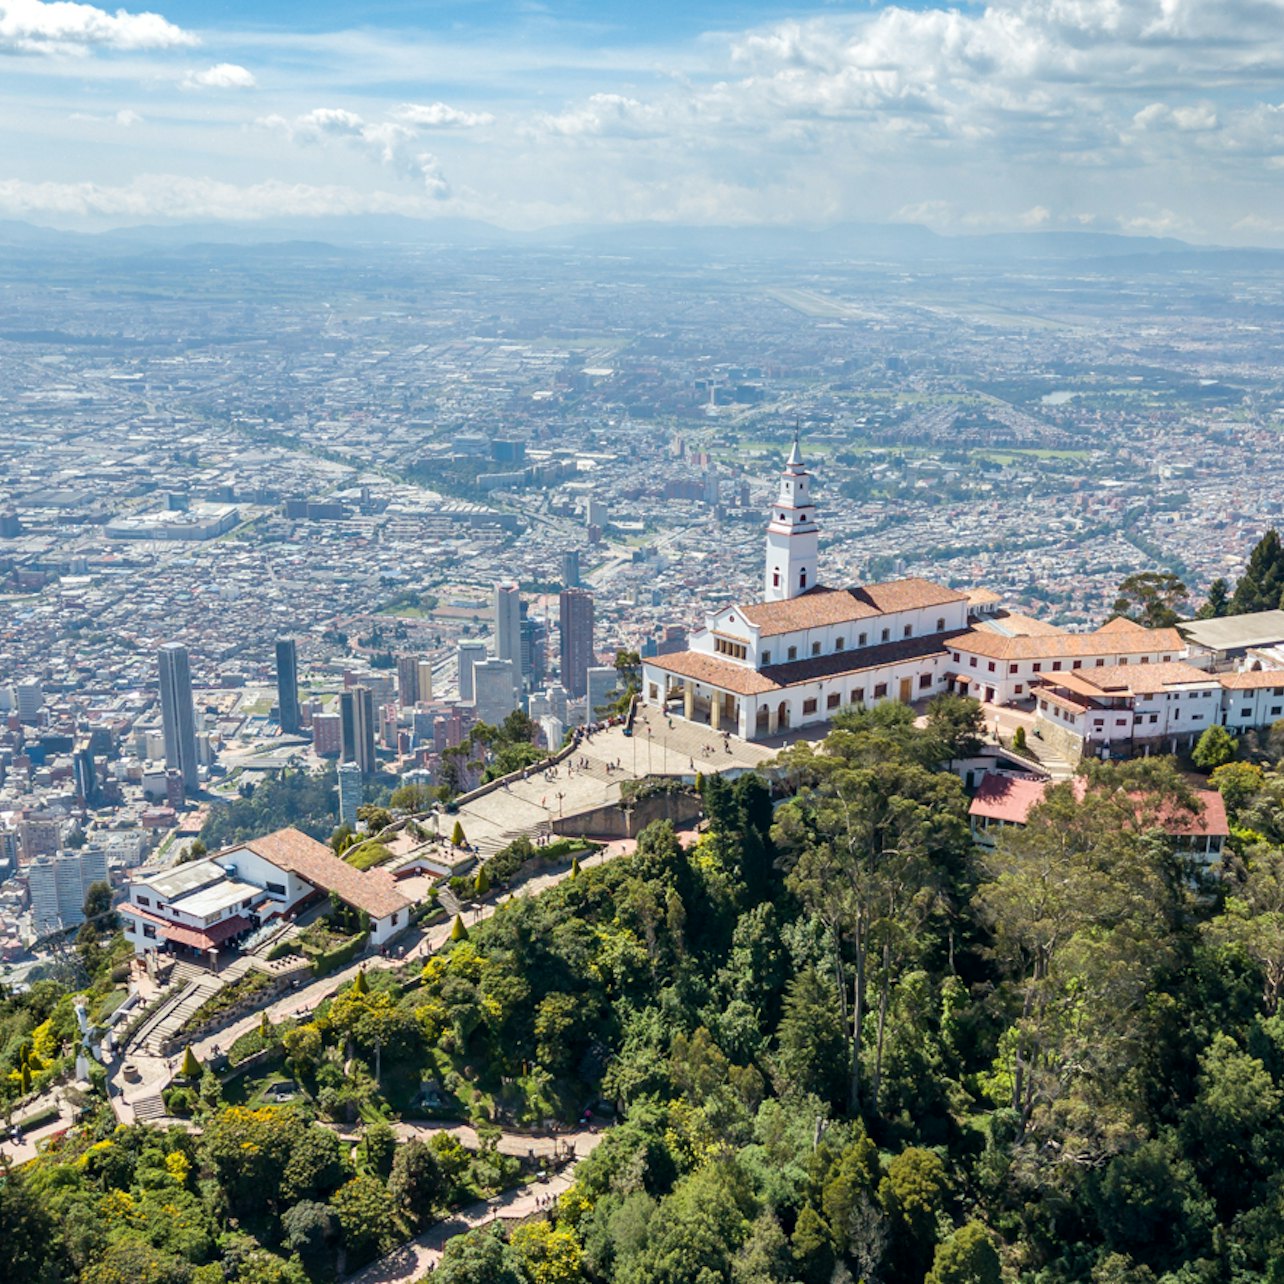 Monserrate - Accommodations in Bogota